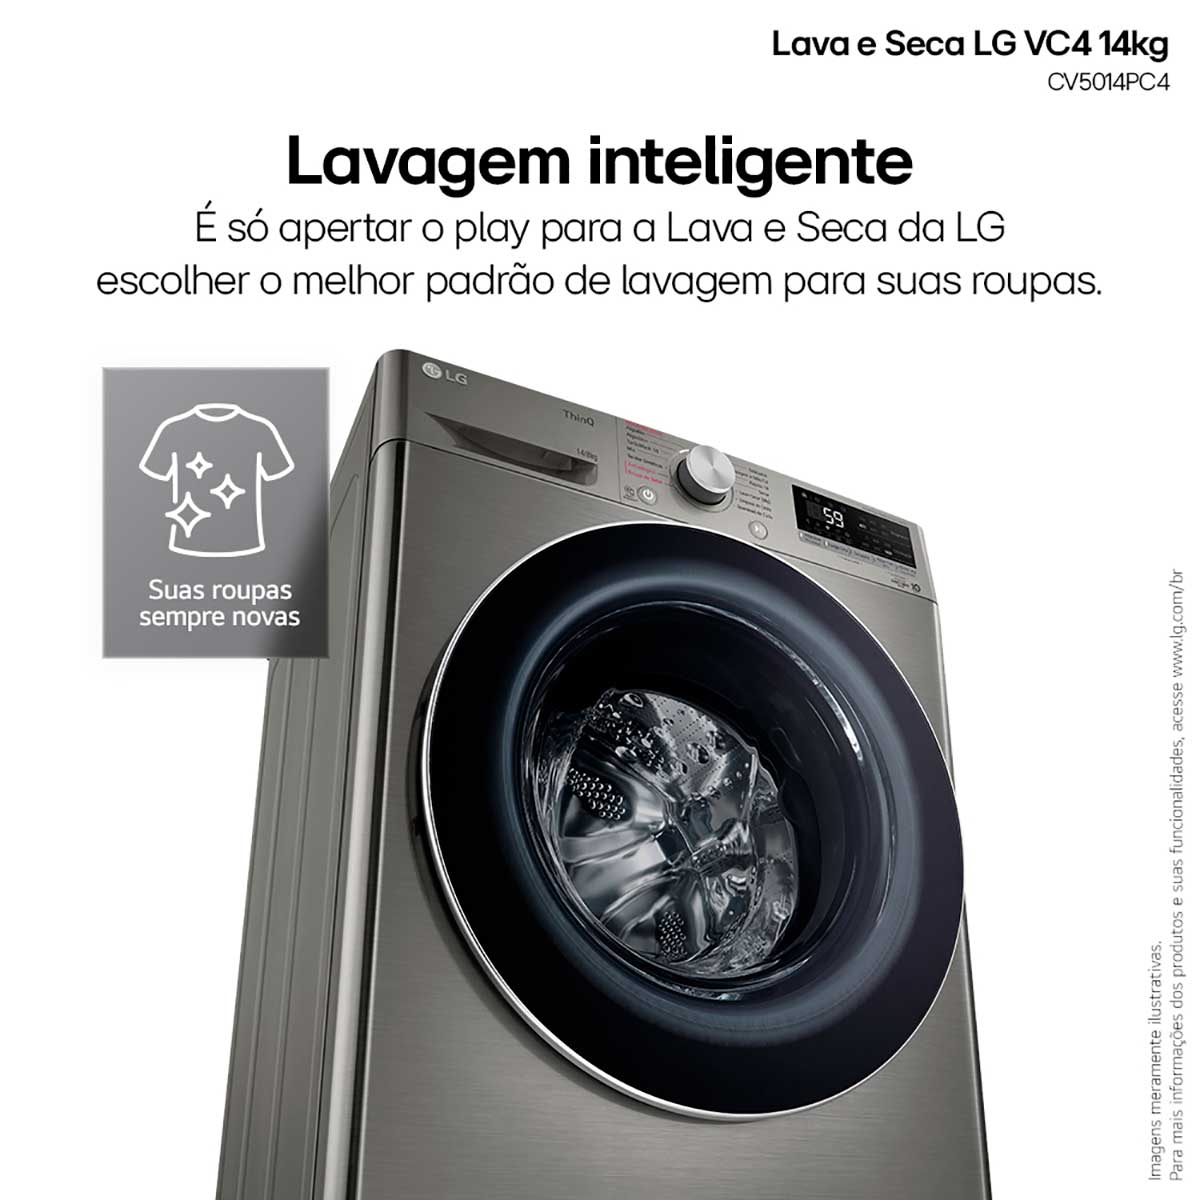 lava-e-seca-lg-smart-vc4-14kg-inox-look-com-inteligencia-artificial-aidd-cv5014pc4-110v-4.jpg